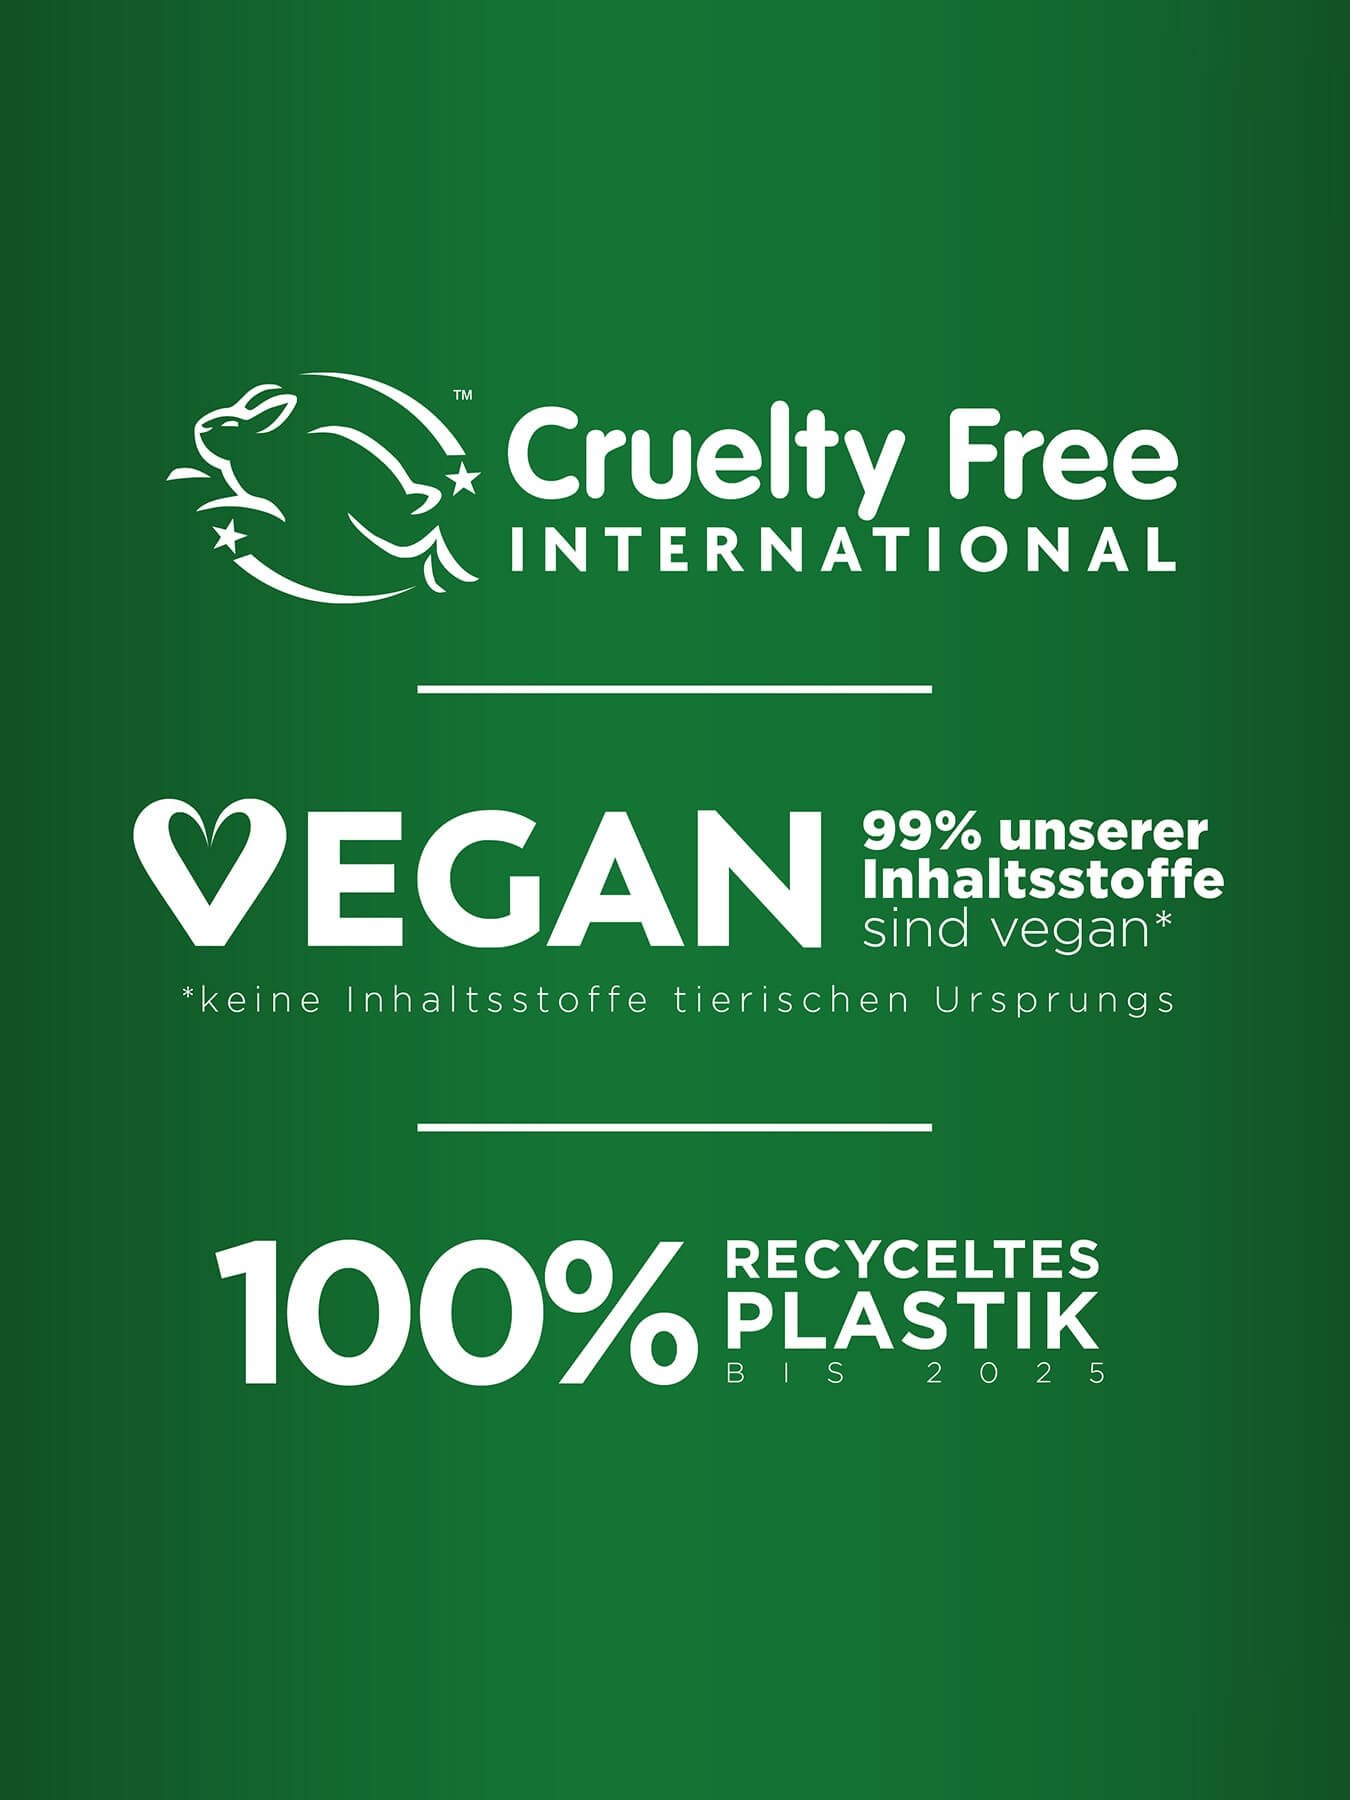 Cruelty Free International, Vegan und 100% recyceltes Plastik - Logos